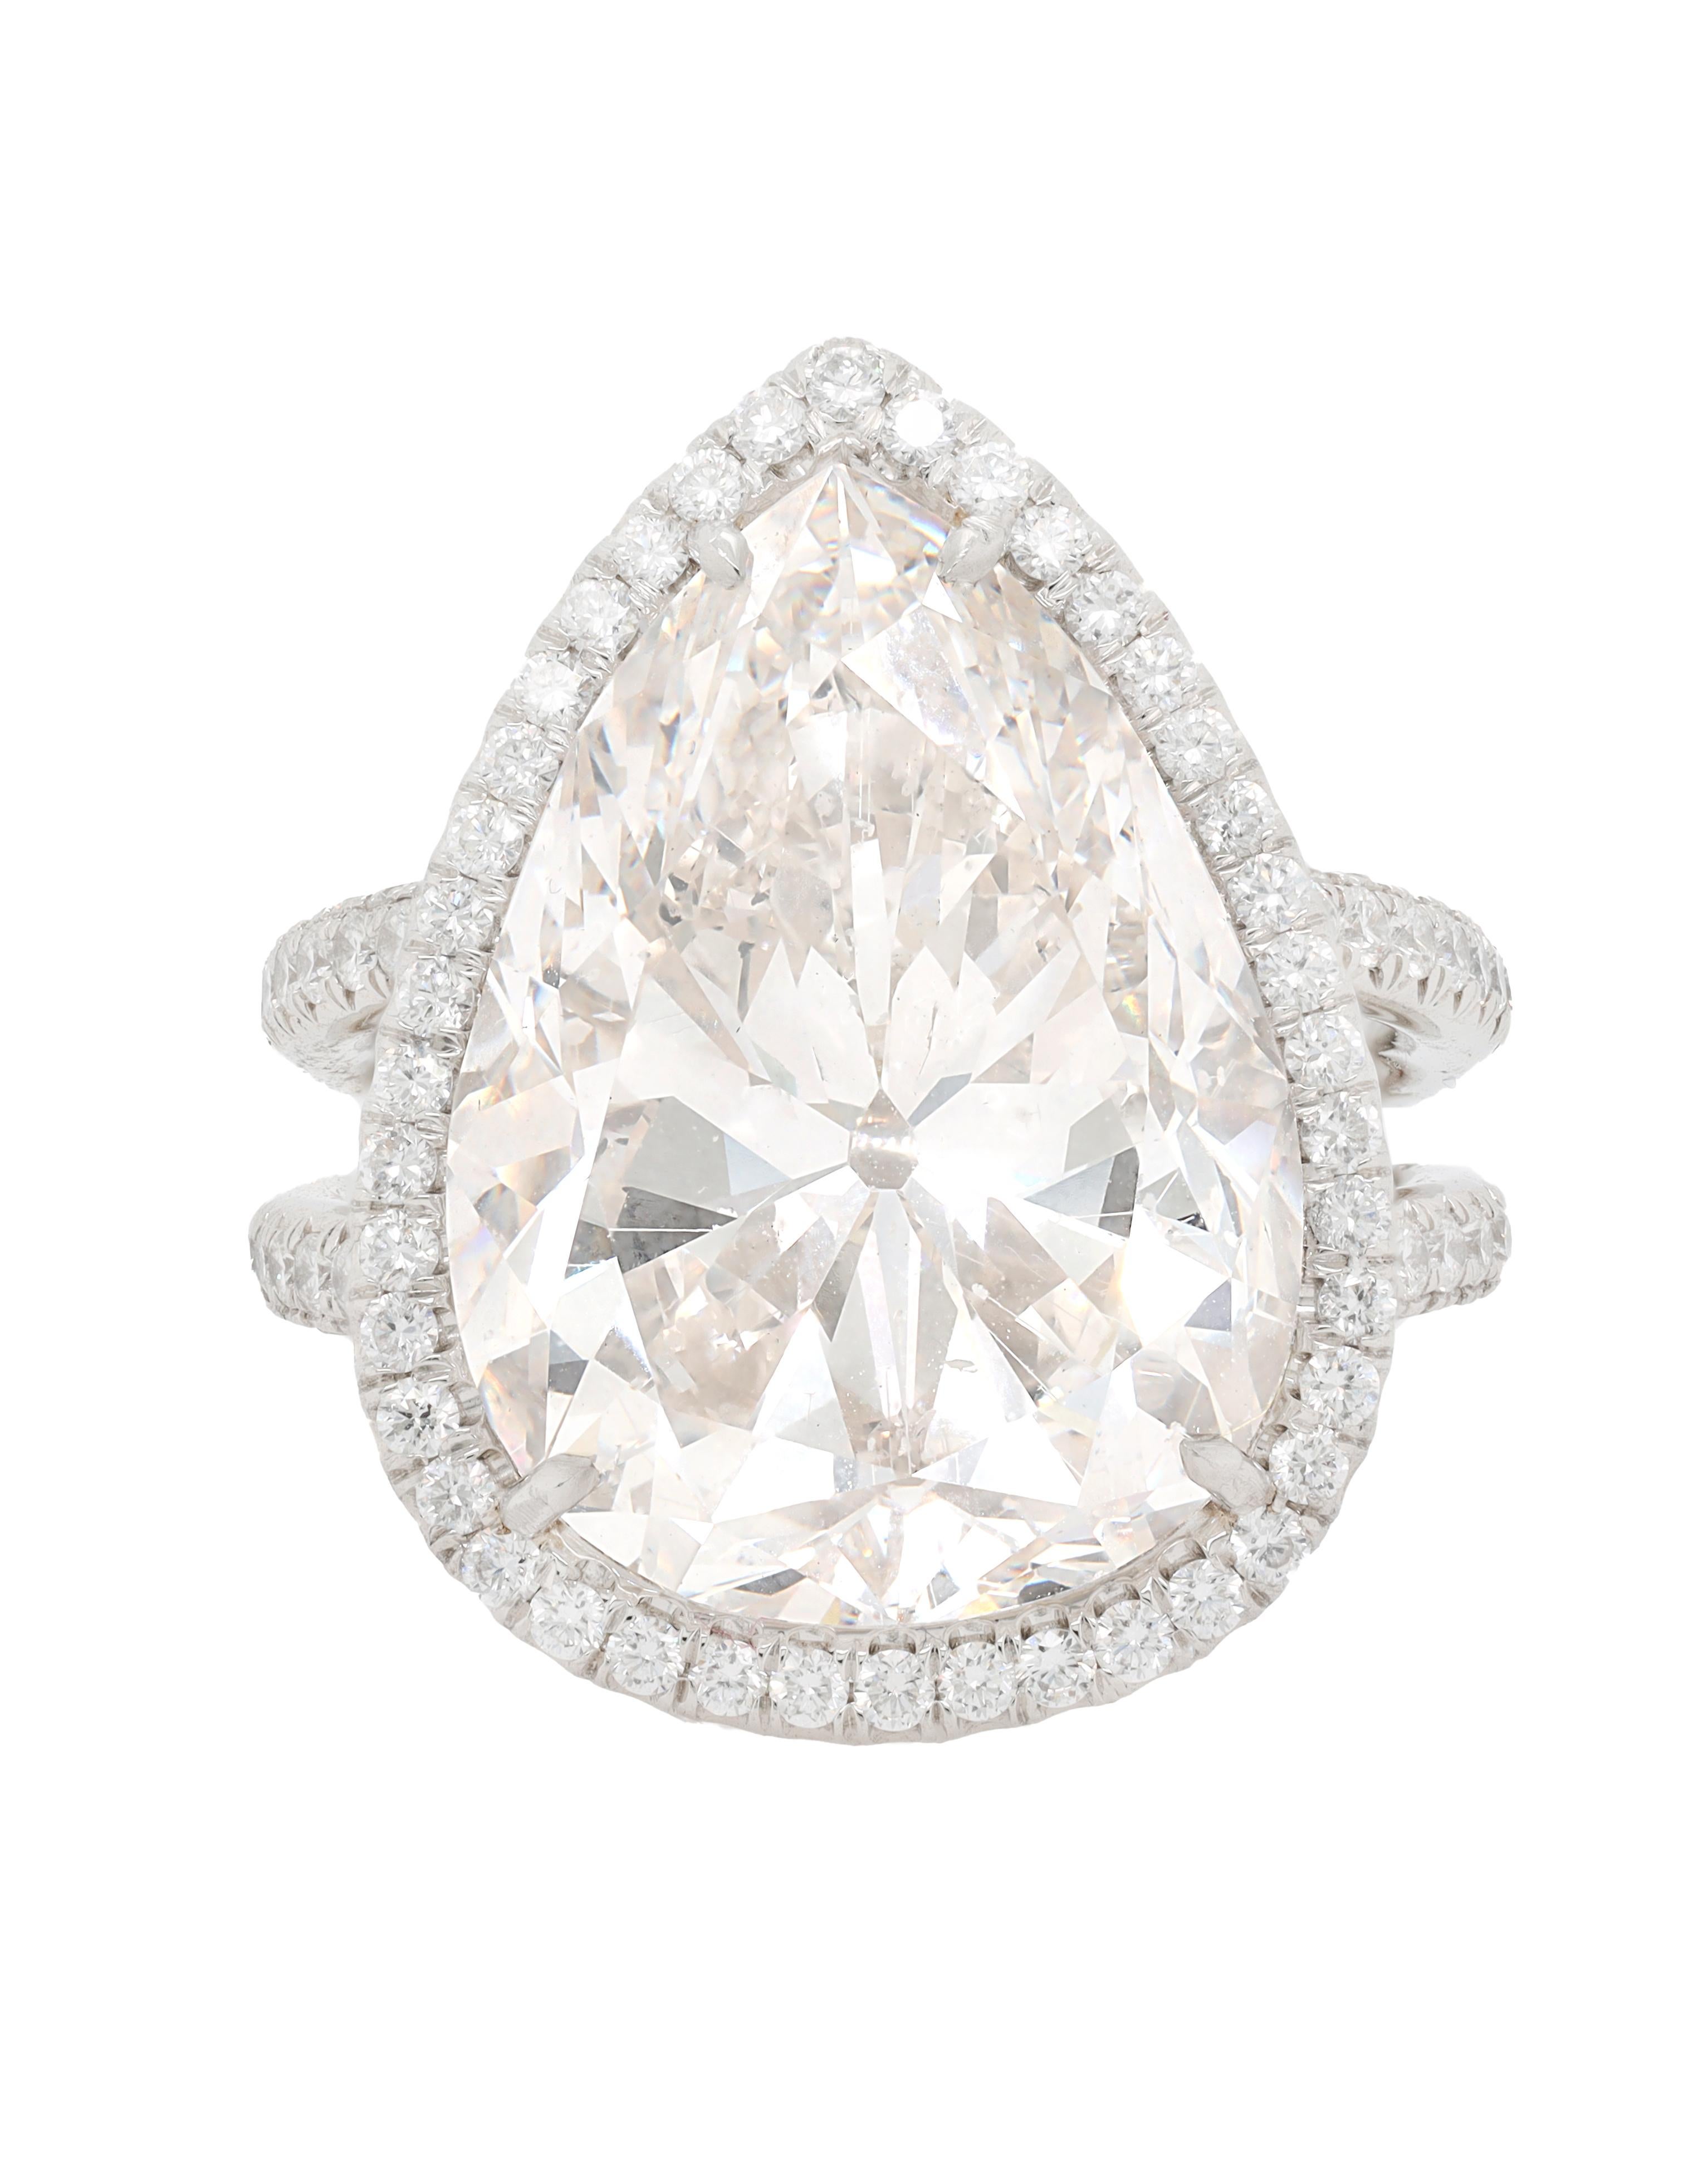 Platinum diamond ring with center EGL certified 15.01 f-si2 (psc227) pear shape diamond set micropave diamond halo split shake setting 
10/13/16
